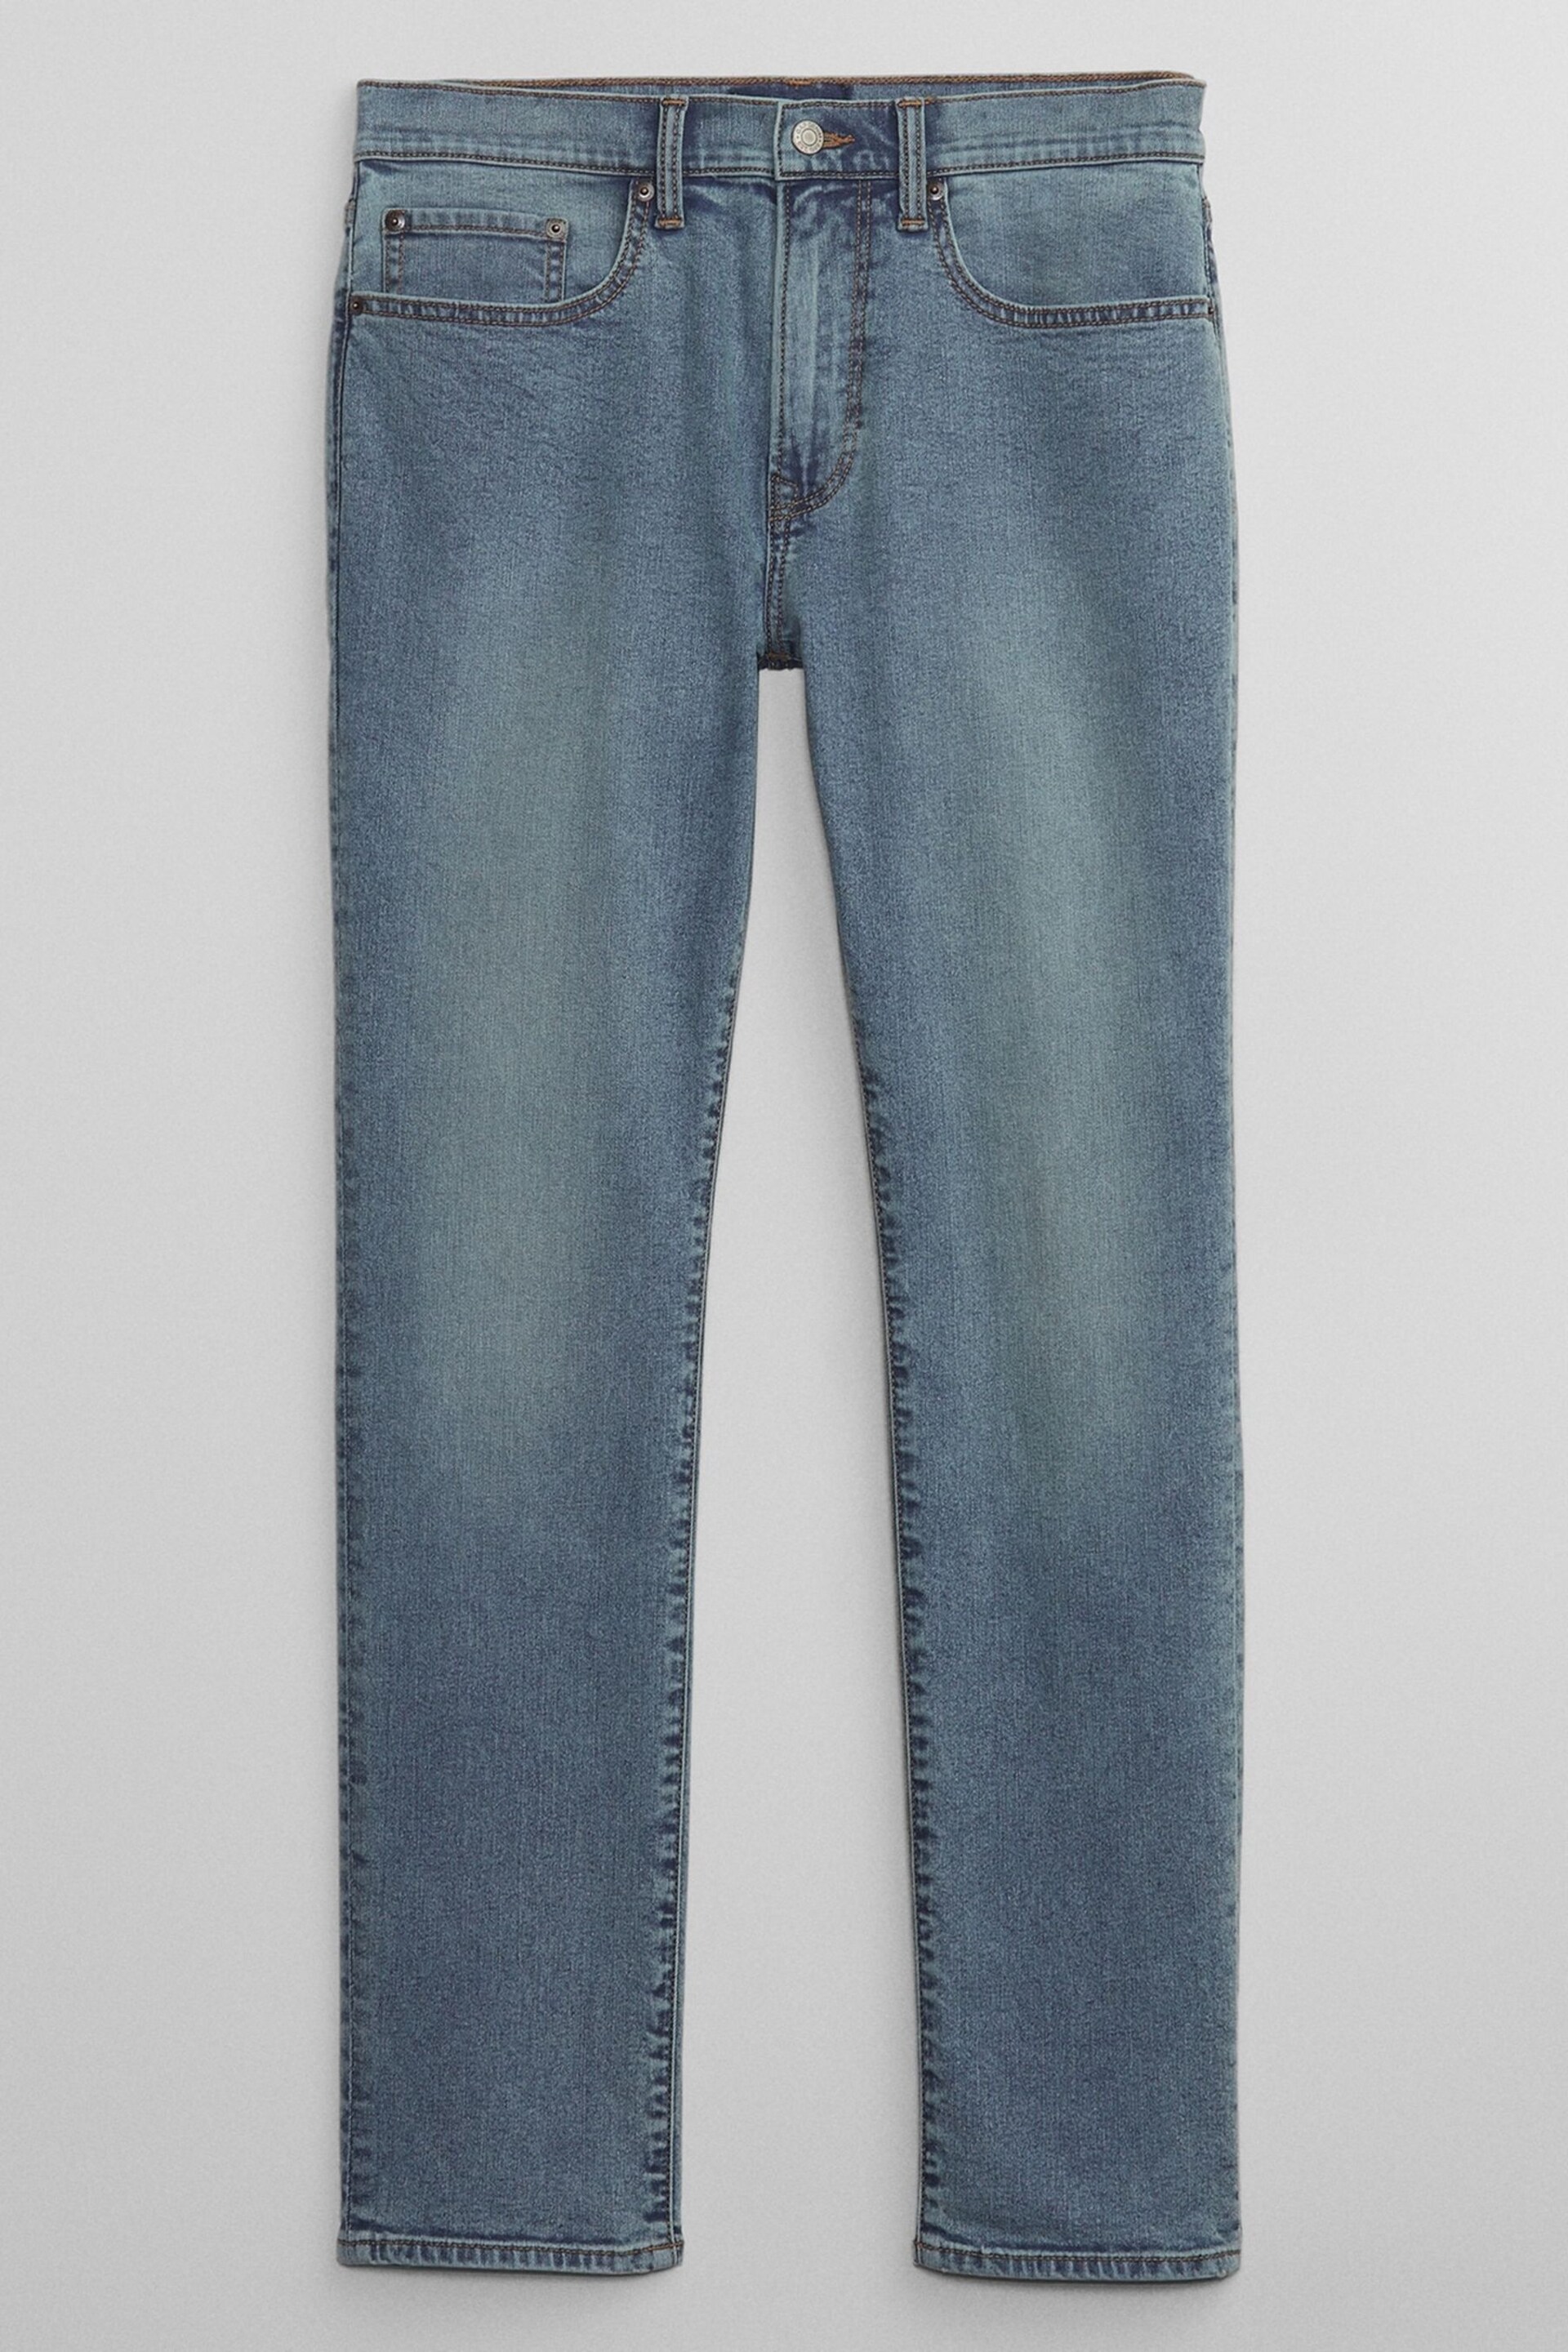 Gap Light Wash Blue Stretch Slim GapFlex Jeans - Image 5 of 7